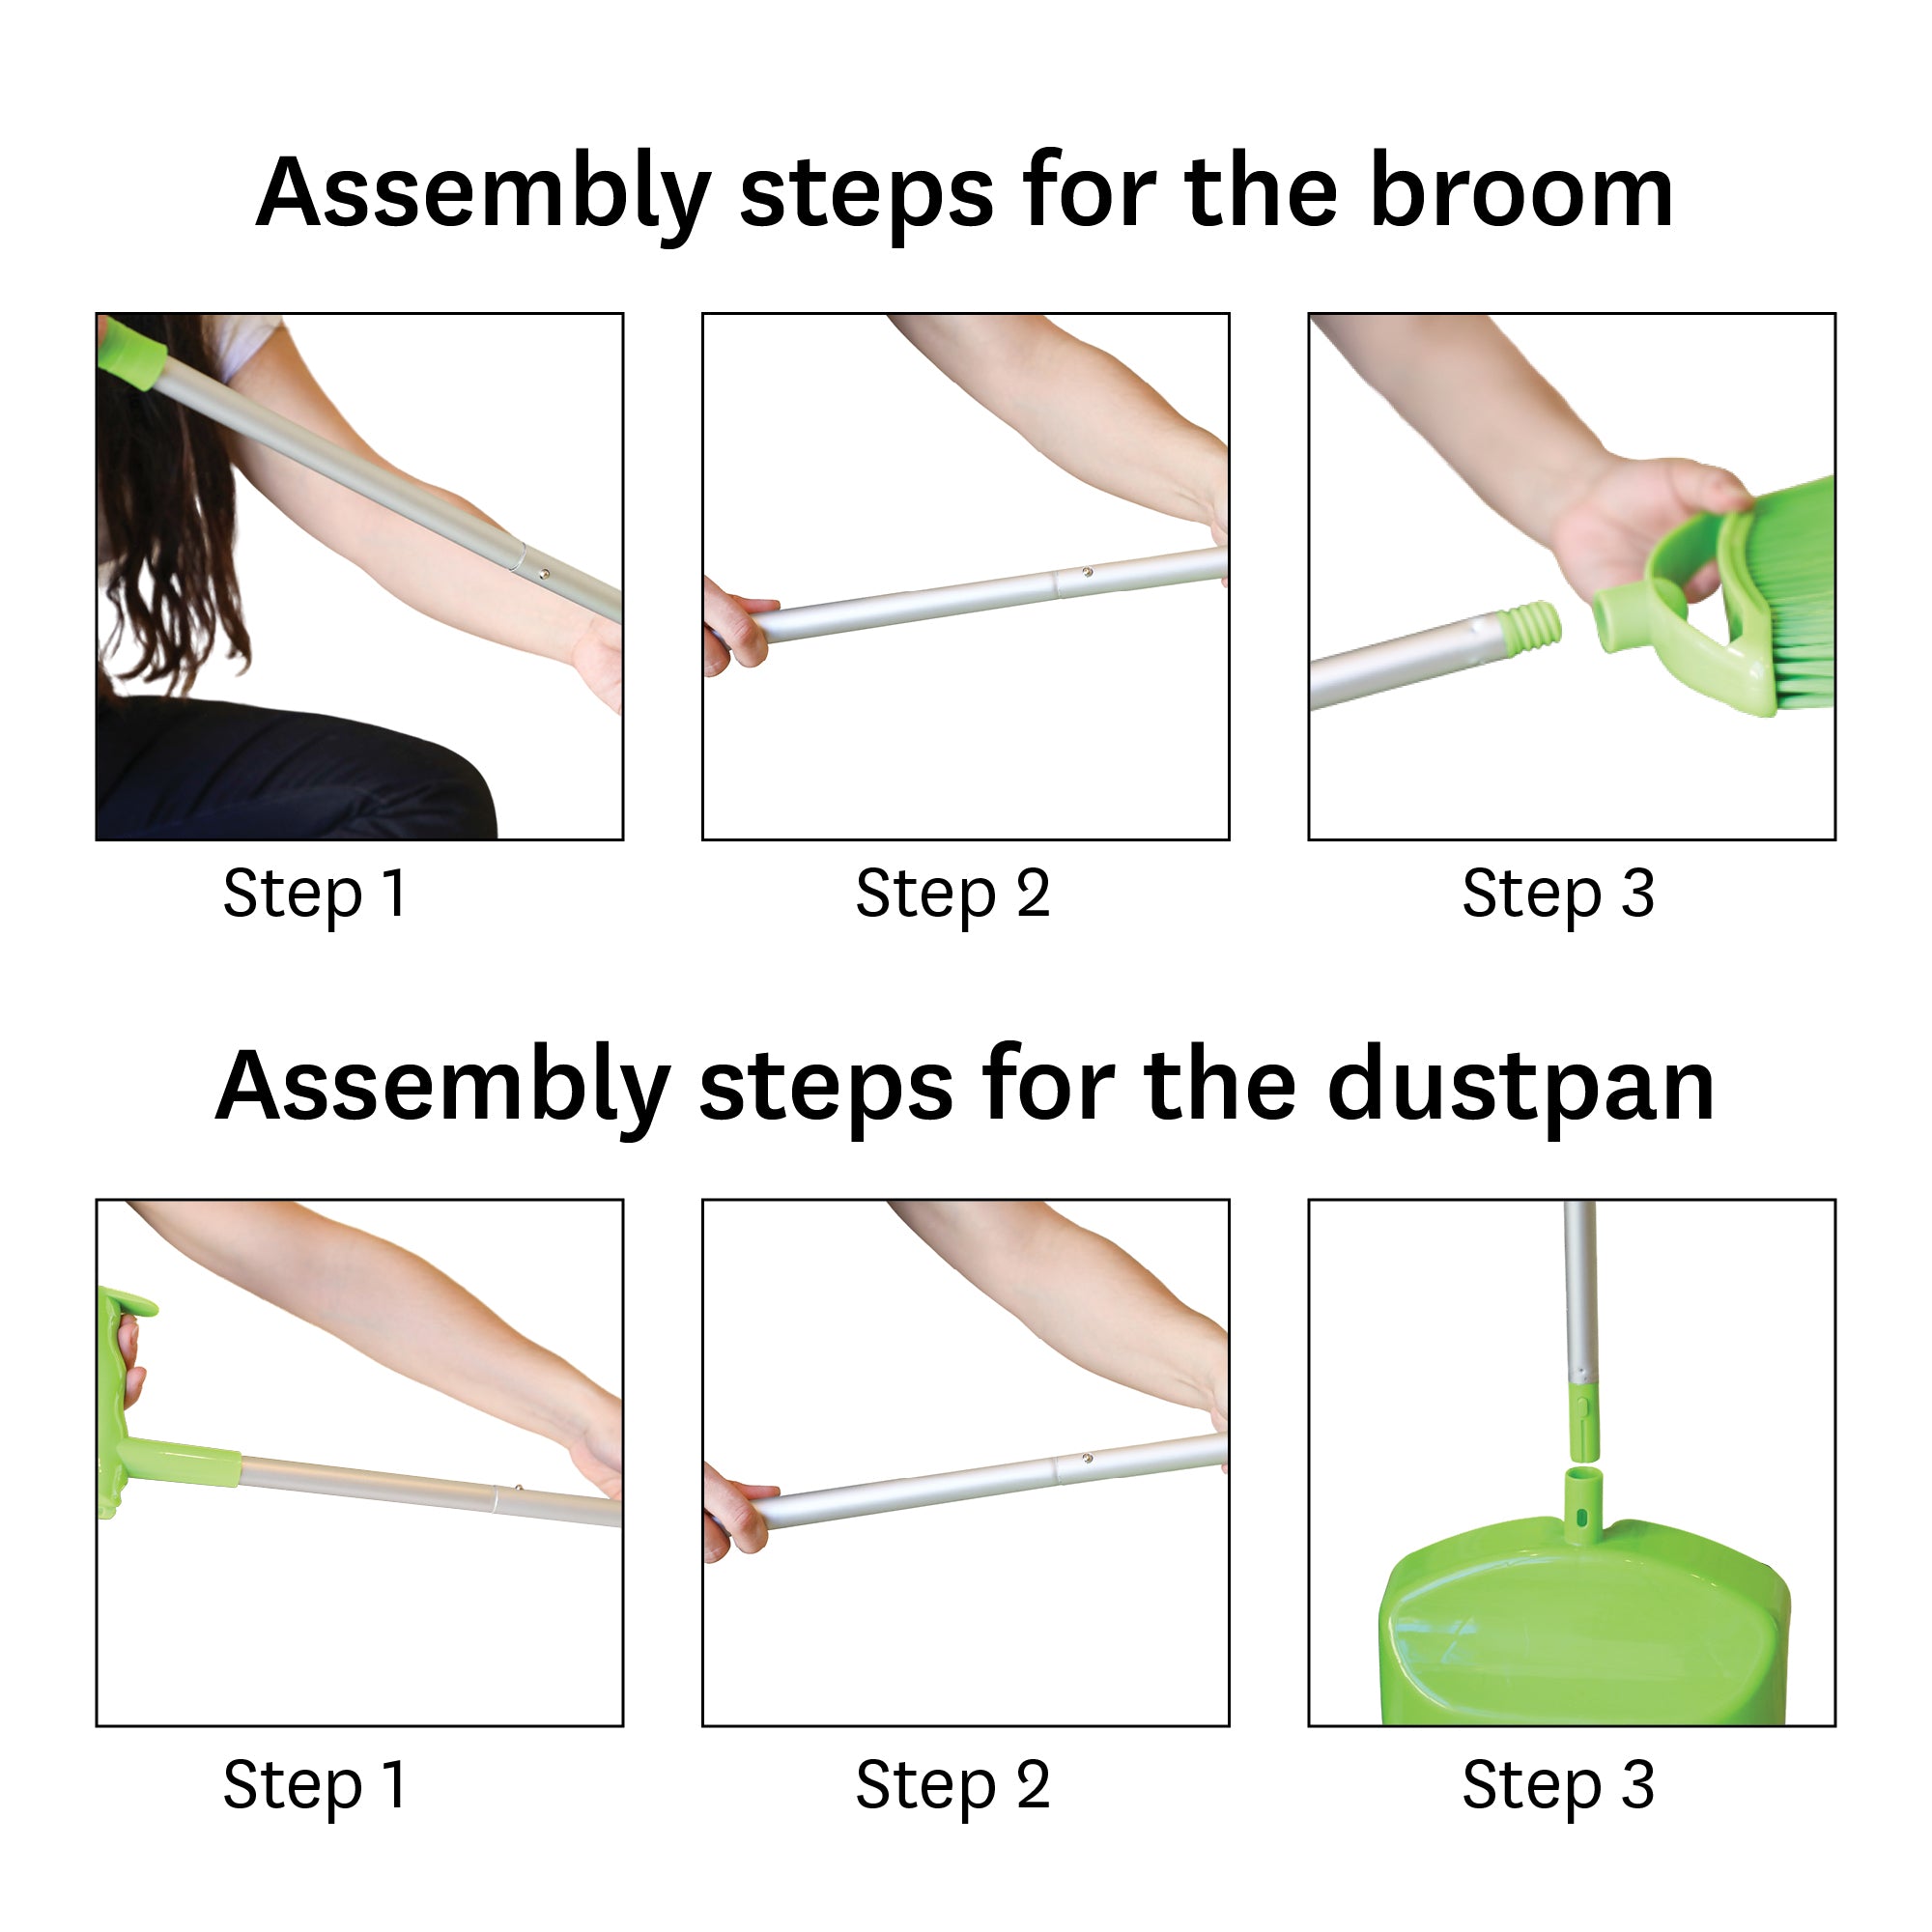 Extendable Upright Dustpan and Broom Set - PortoTrash